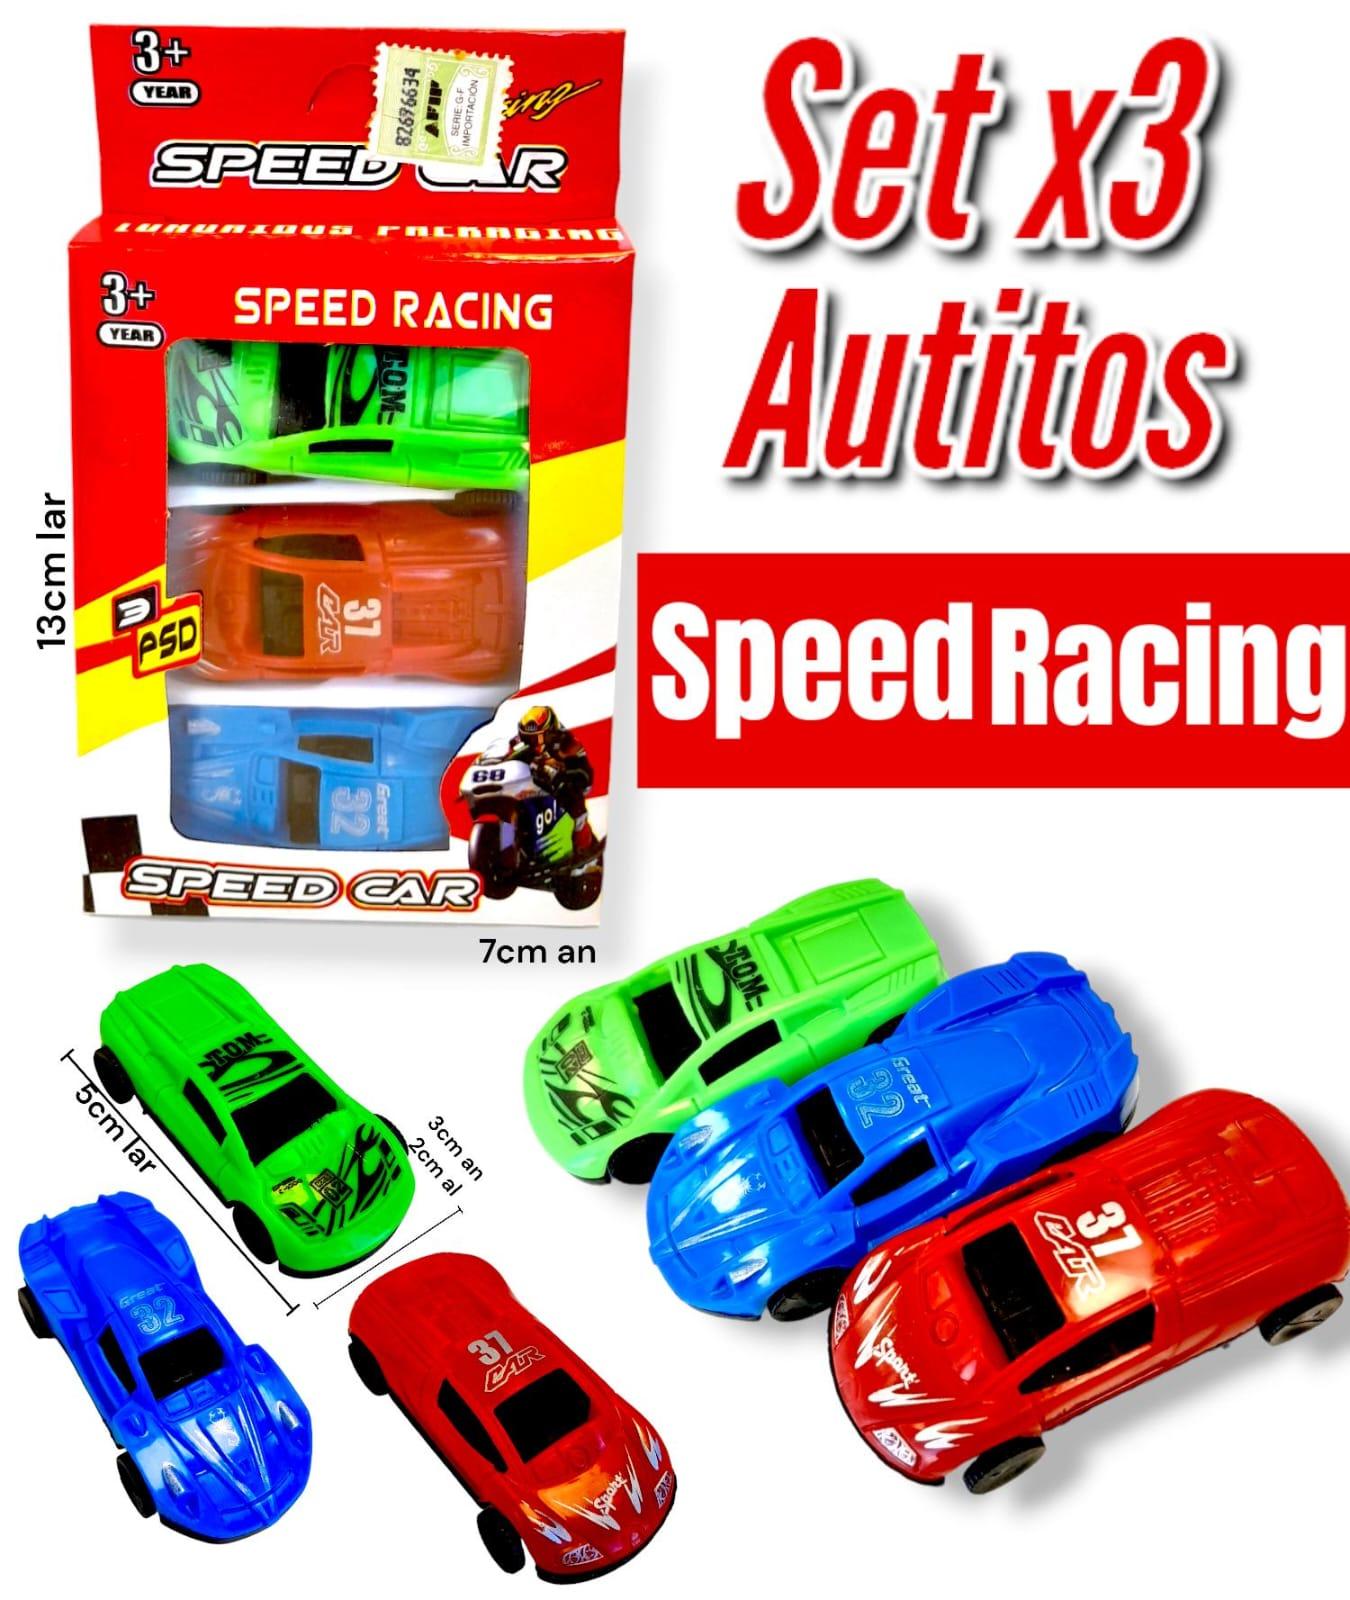 Set x 3 Autitos SPEED RACING 